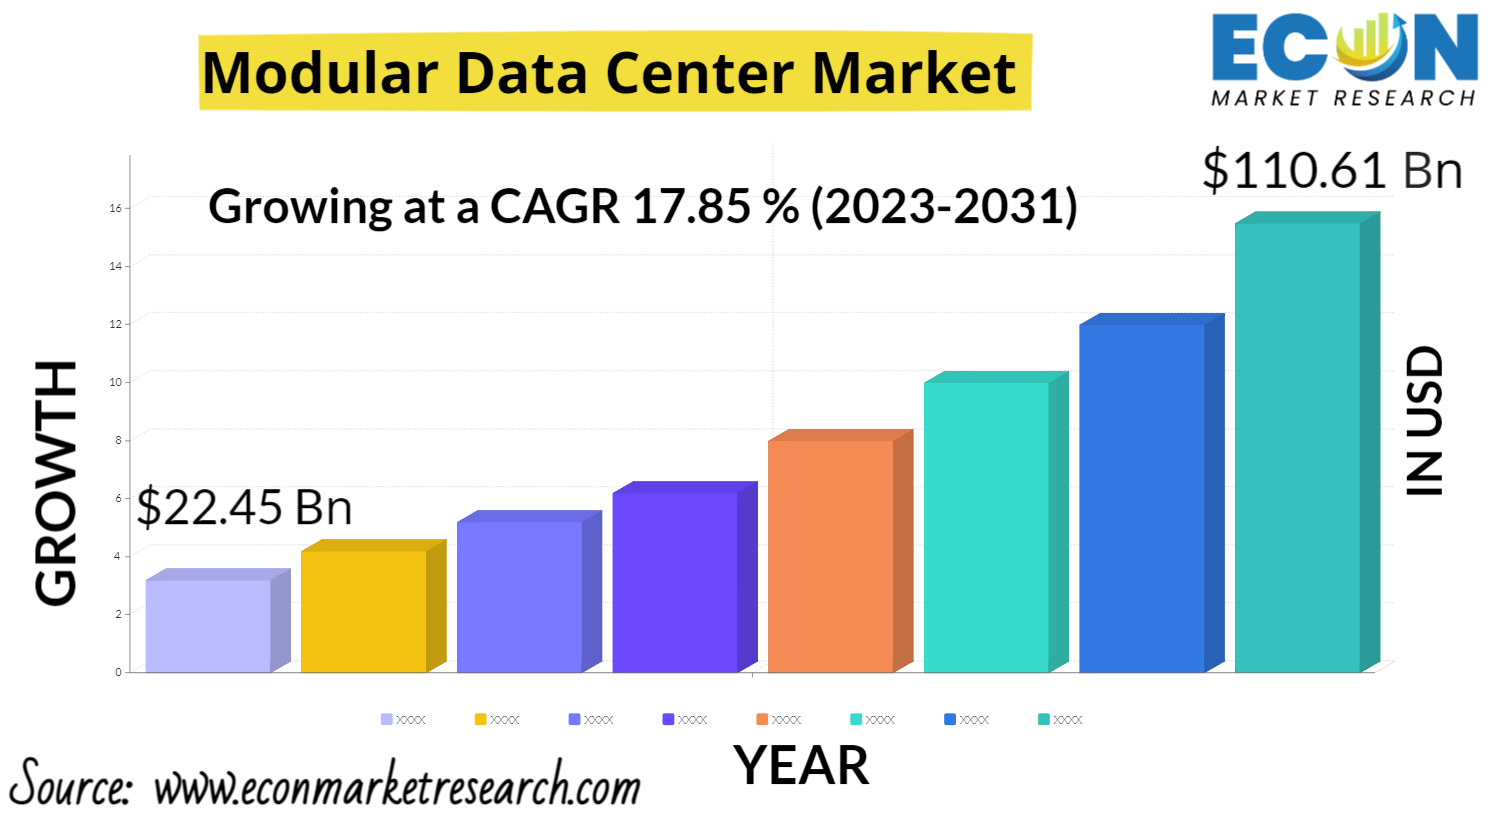 Modular Data Center Market Share, Analysis, Trends 20232031